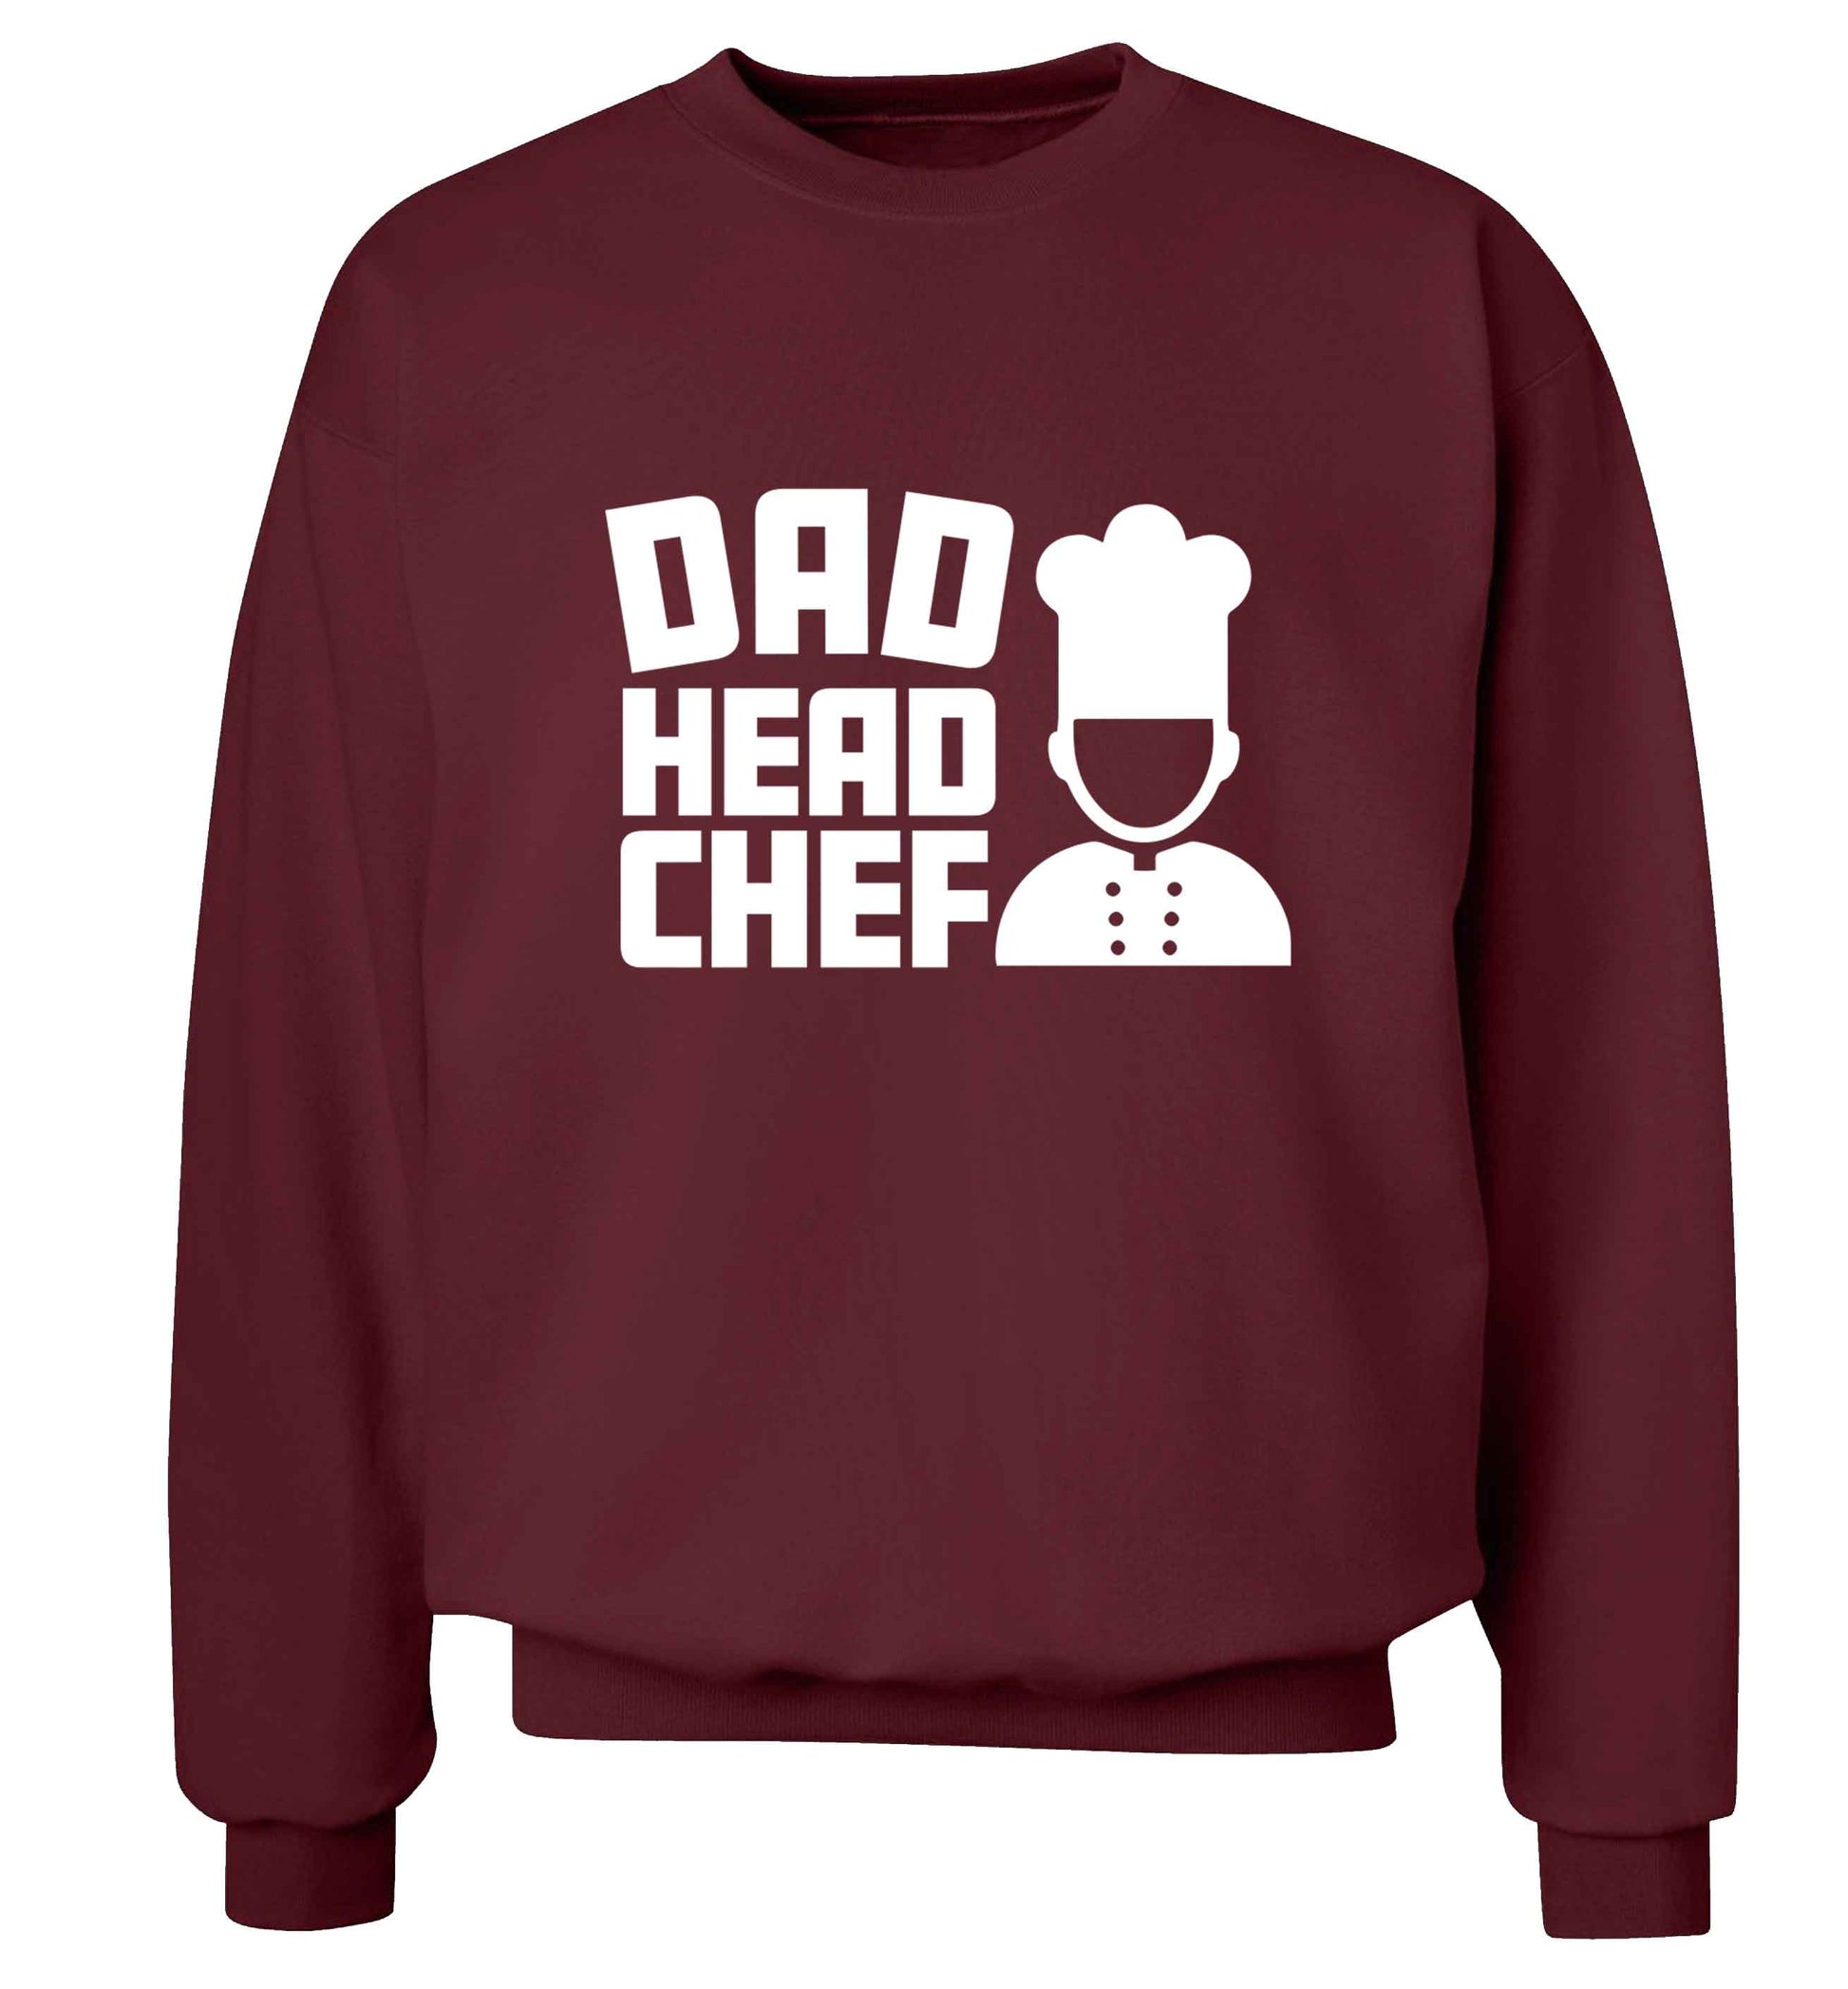 Dad head chef adult's unisex maroon sweater 2XL